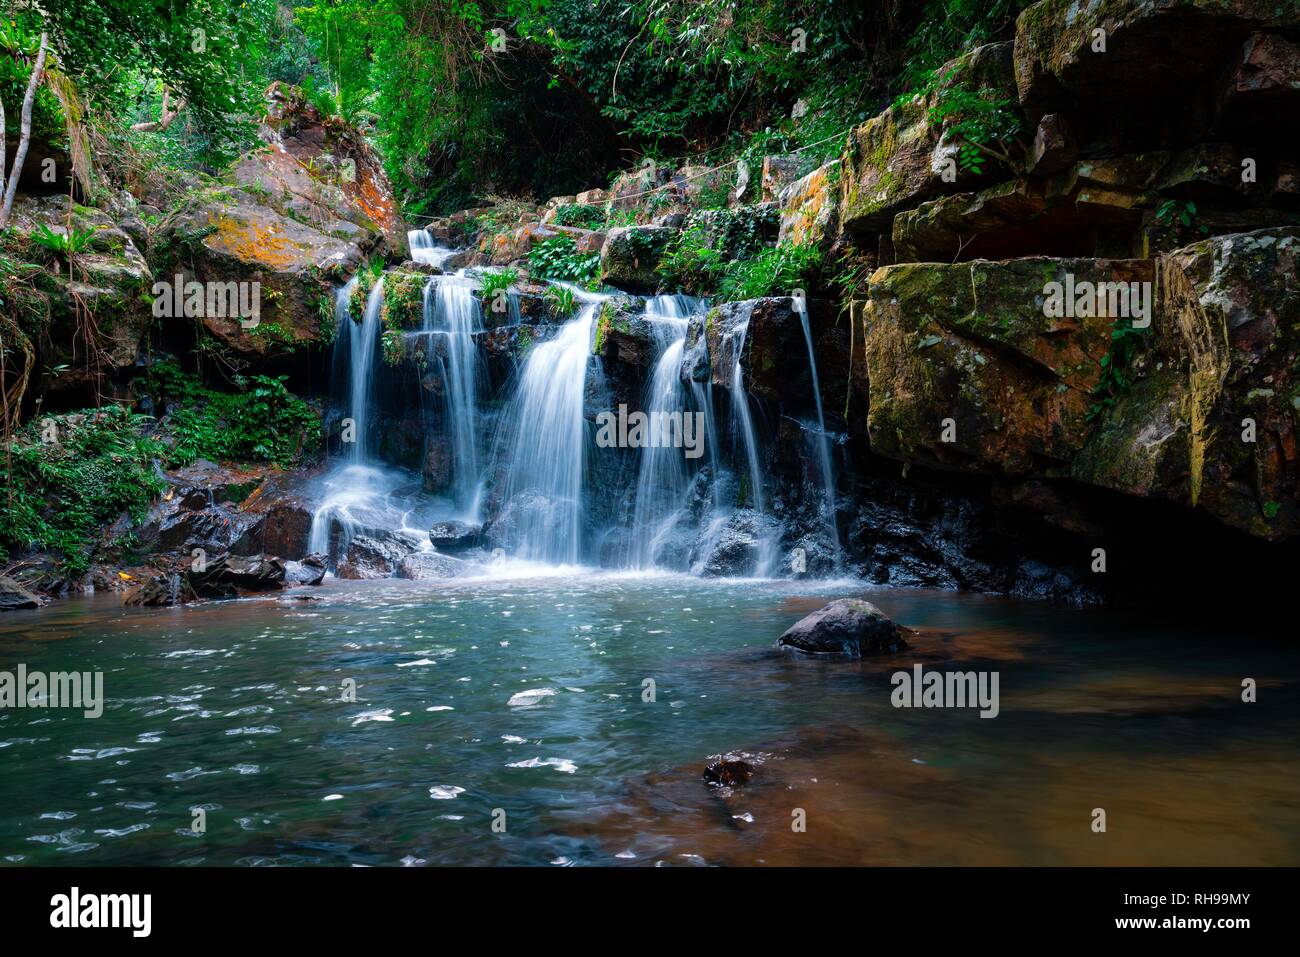 Waterfall the botanical garden in the National Park of Phong Nha Ke Bang, Vietnam. Stock Photo